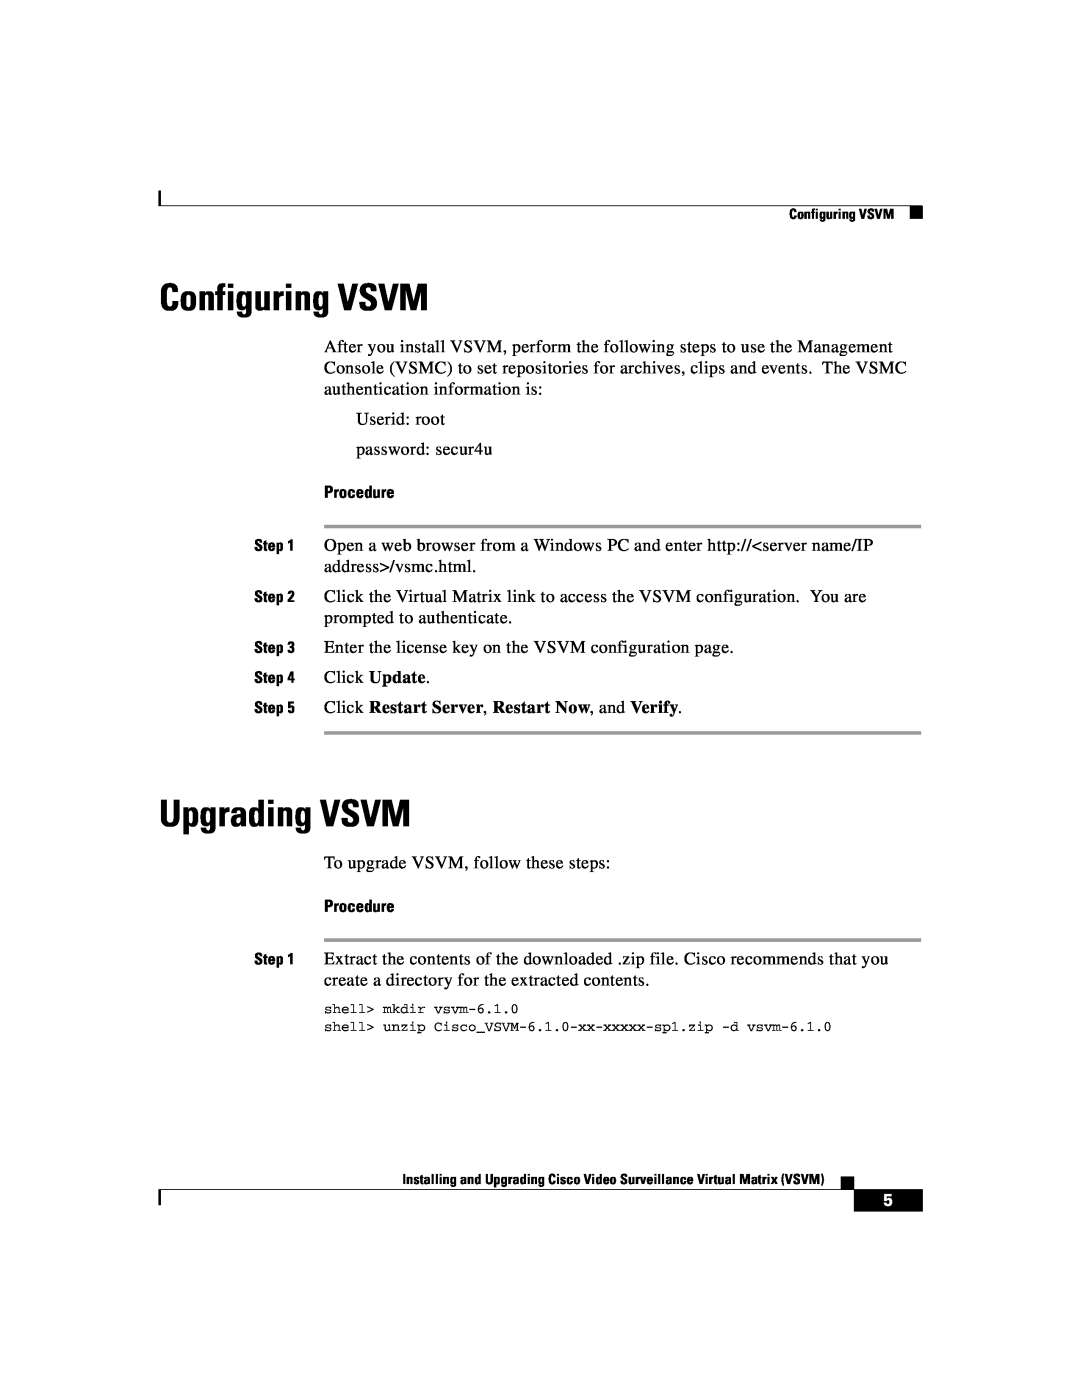 Cisco Systems manual Configuring VSVM, Upgrading VSVM, Click Restart Server, Restart Now, and Verify, Procedure 